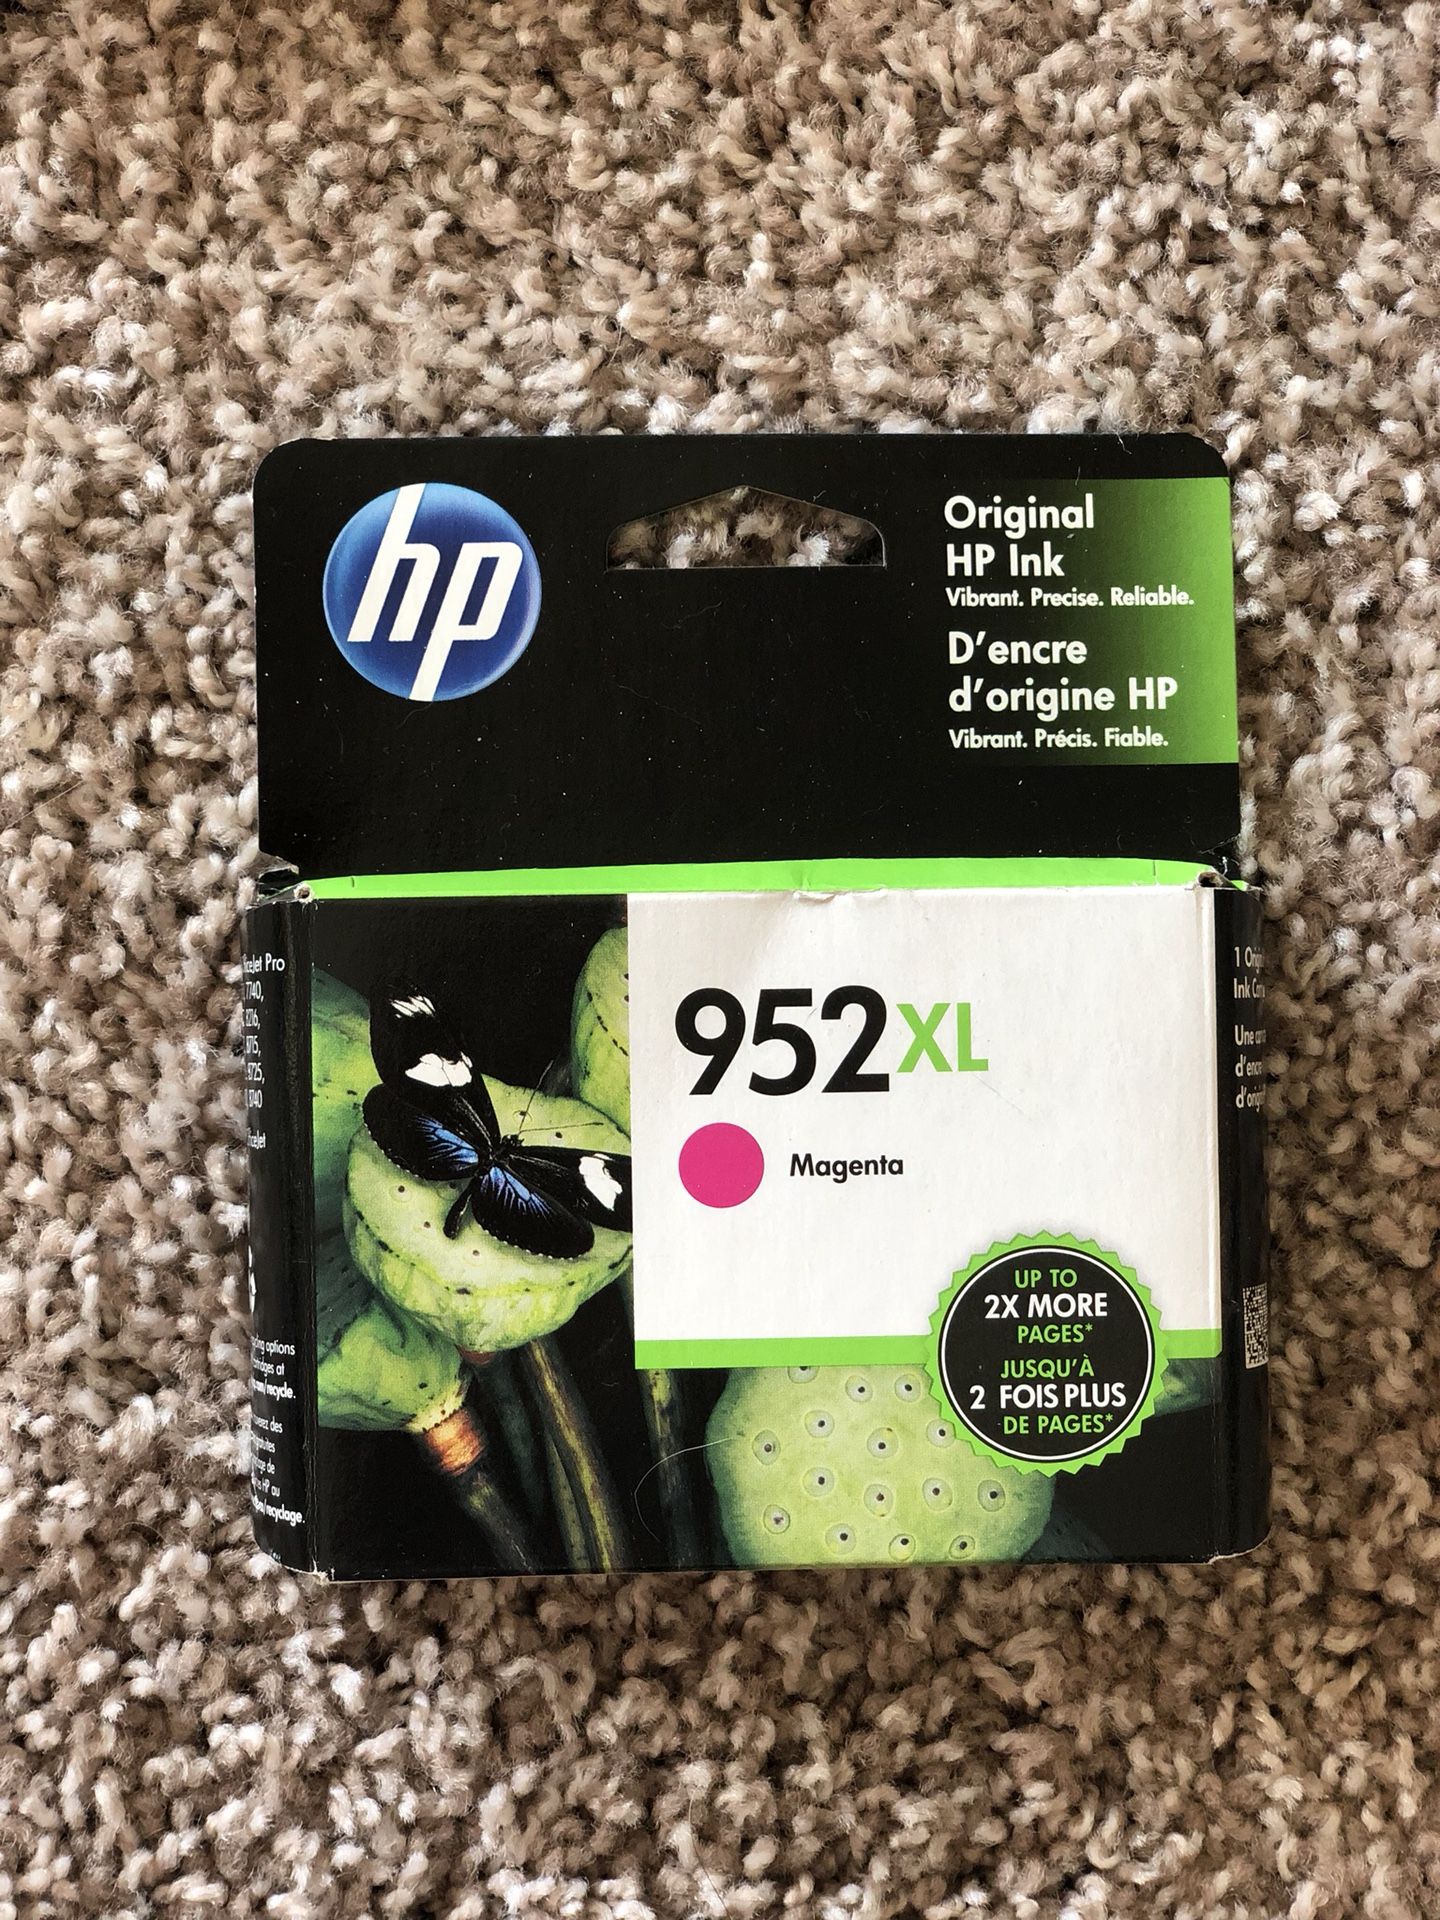 NEW HP - 952XL Ink Cartridge - Magenta (in box)